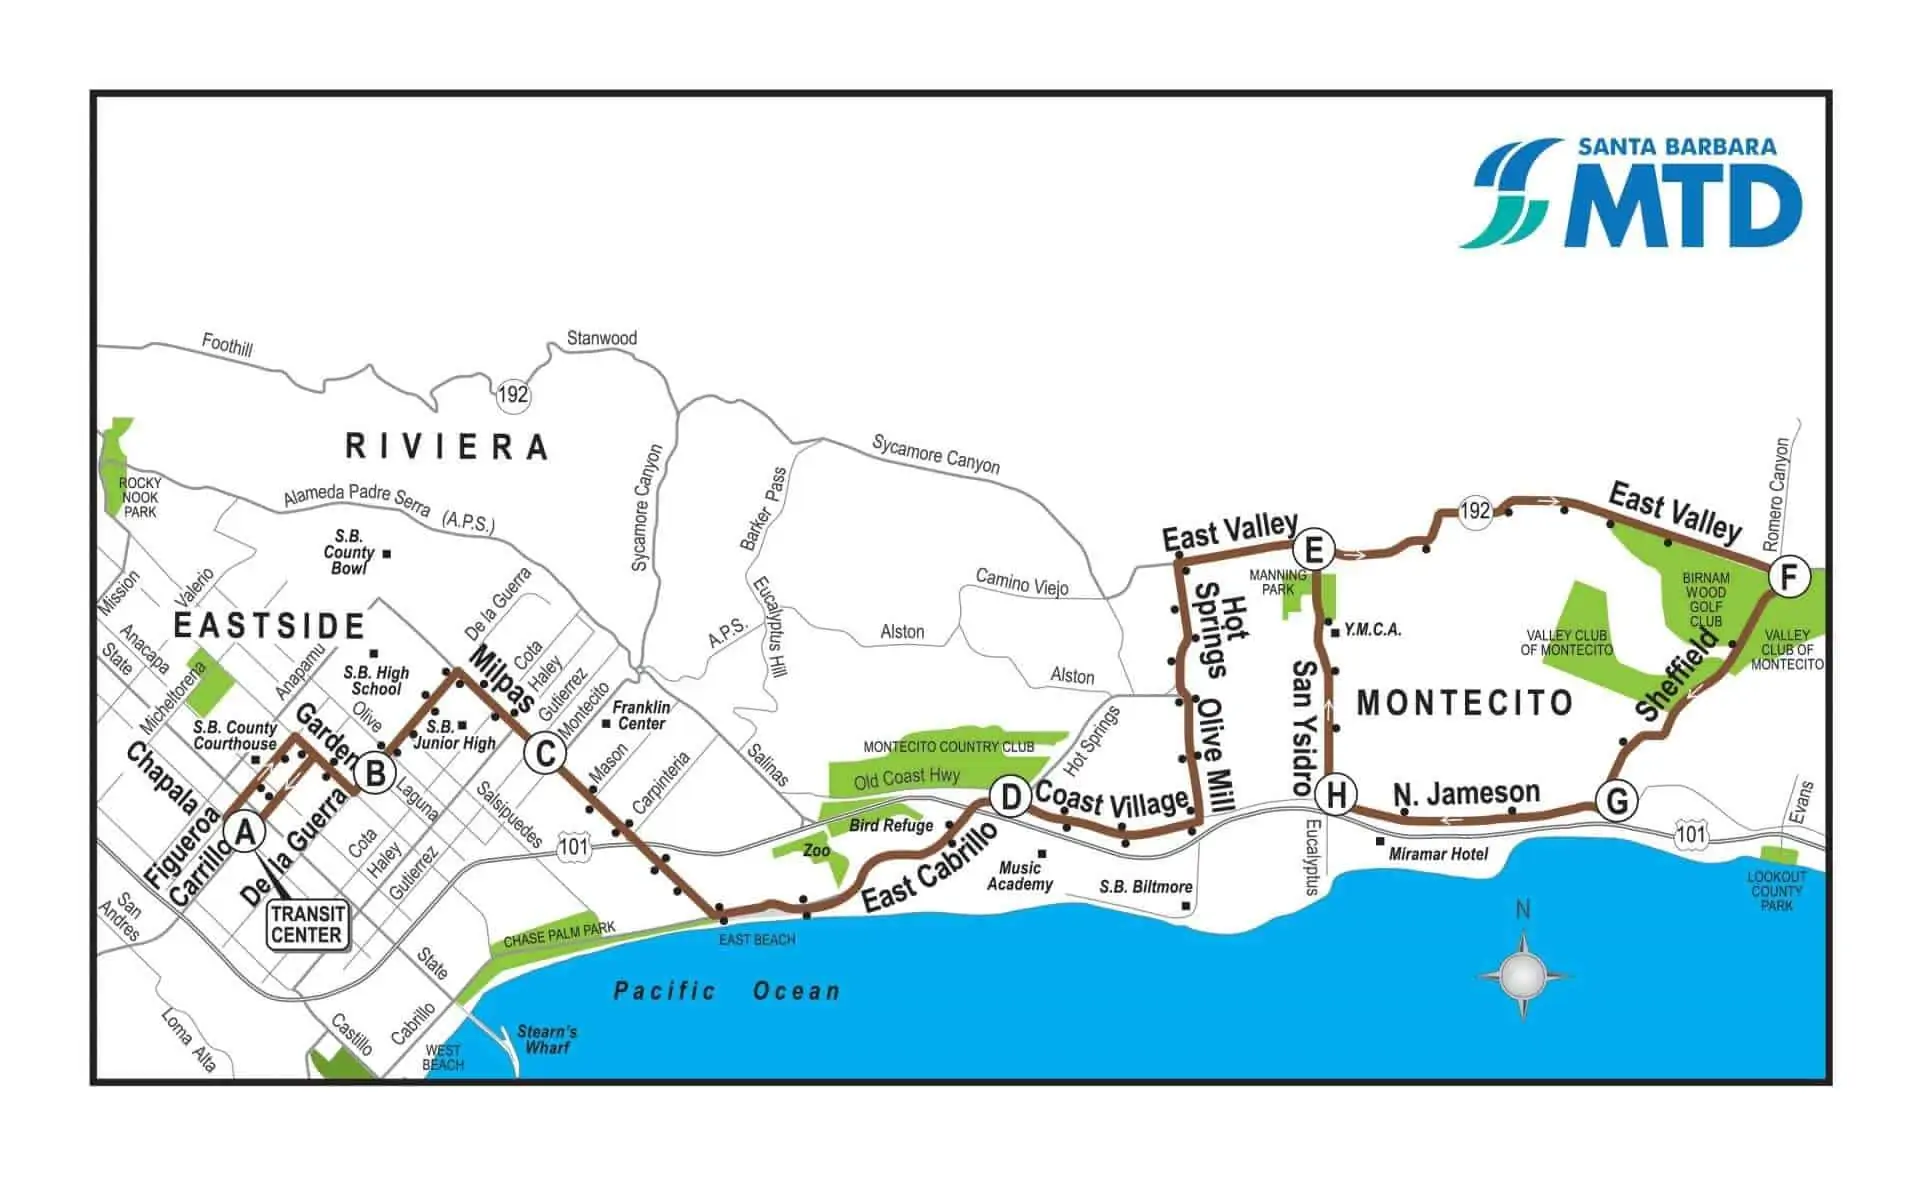 Line 14 – Montecito